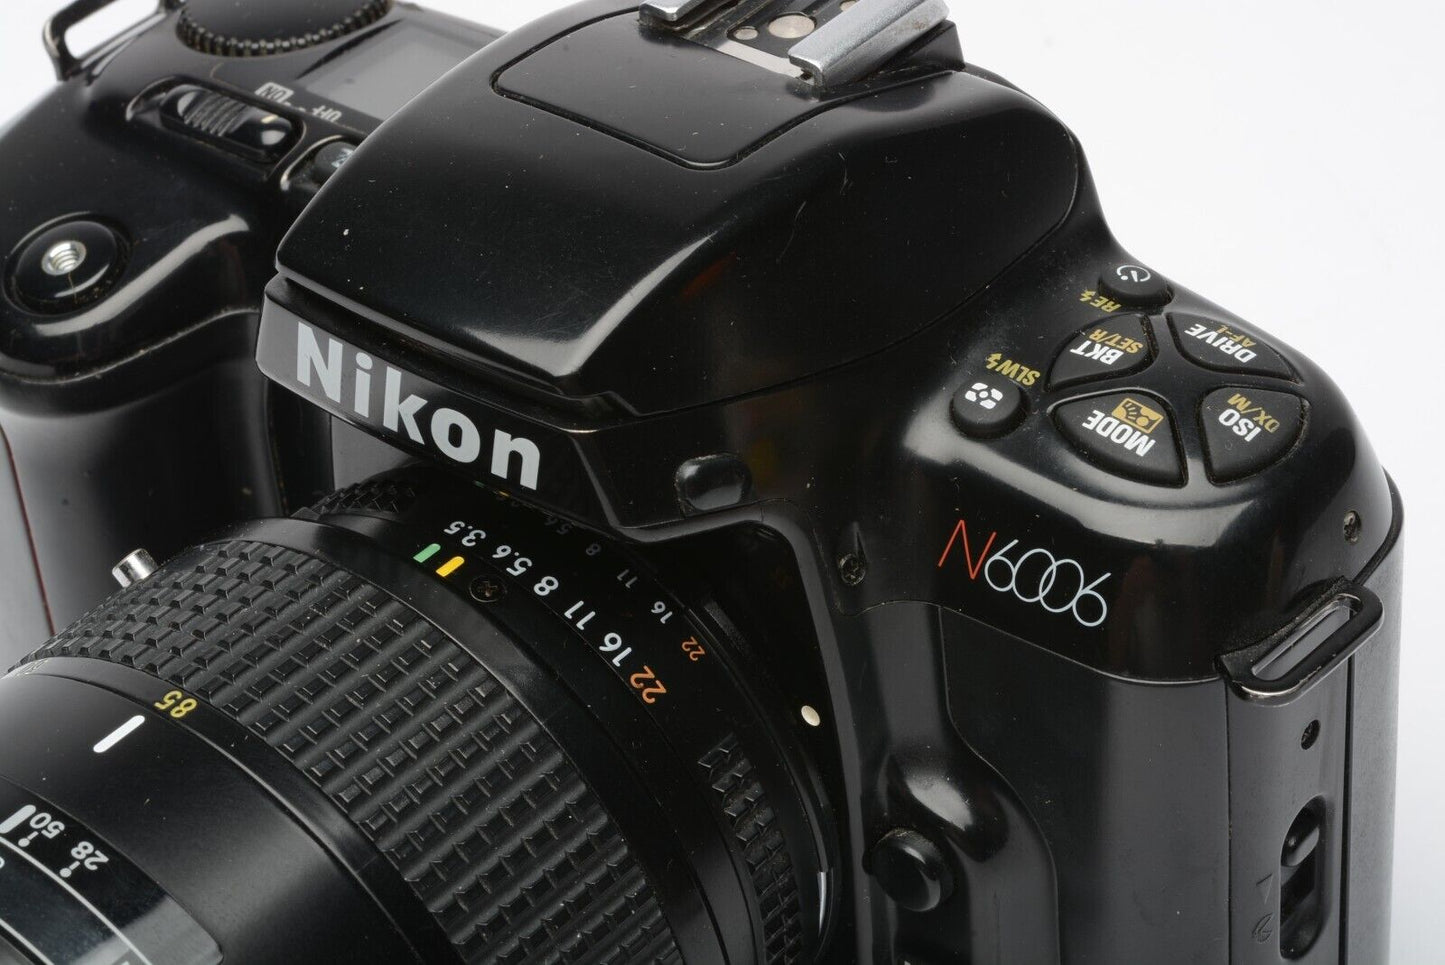 EXC++ NIKON N6006 35mm SLR w/28-85mm f3.5-4.5 ZOOM, STRAP, LOWE CASE, CAP TESTED